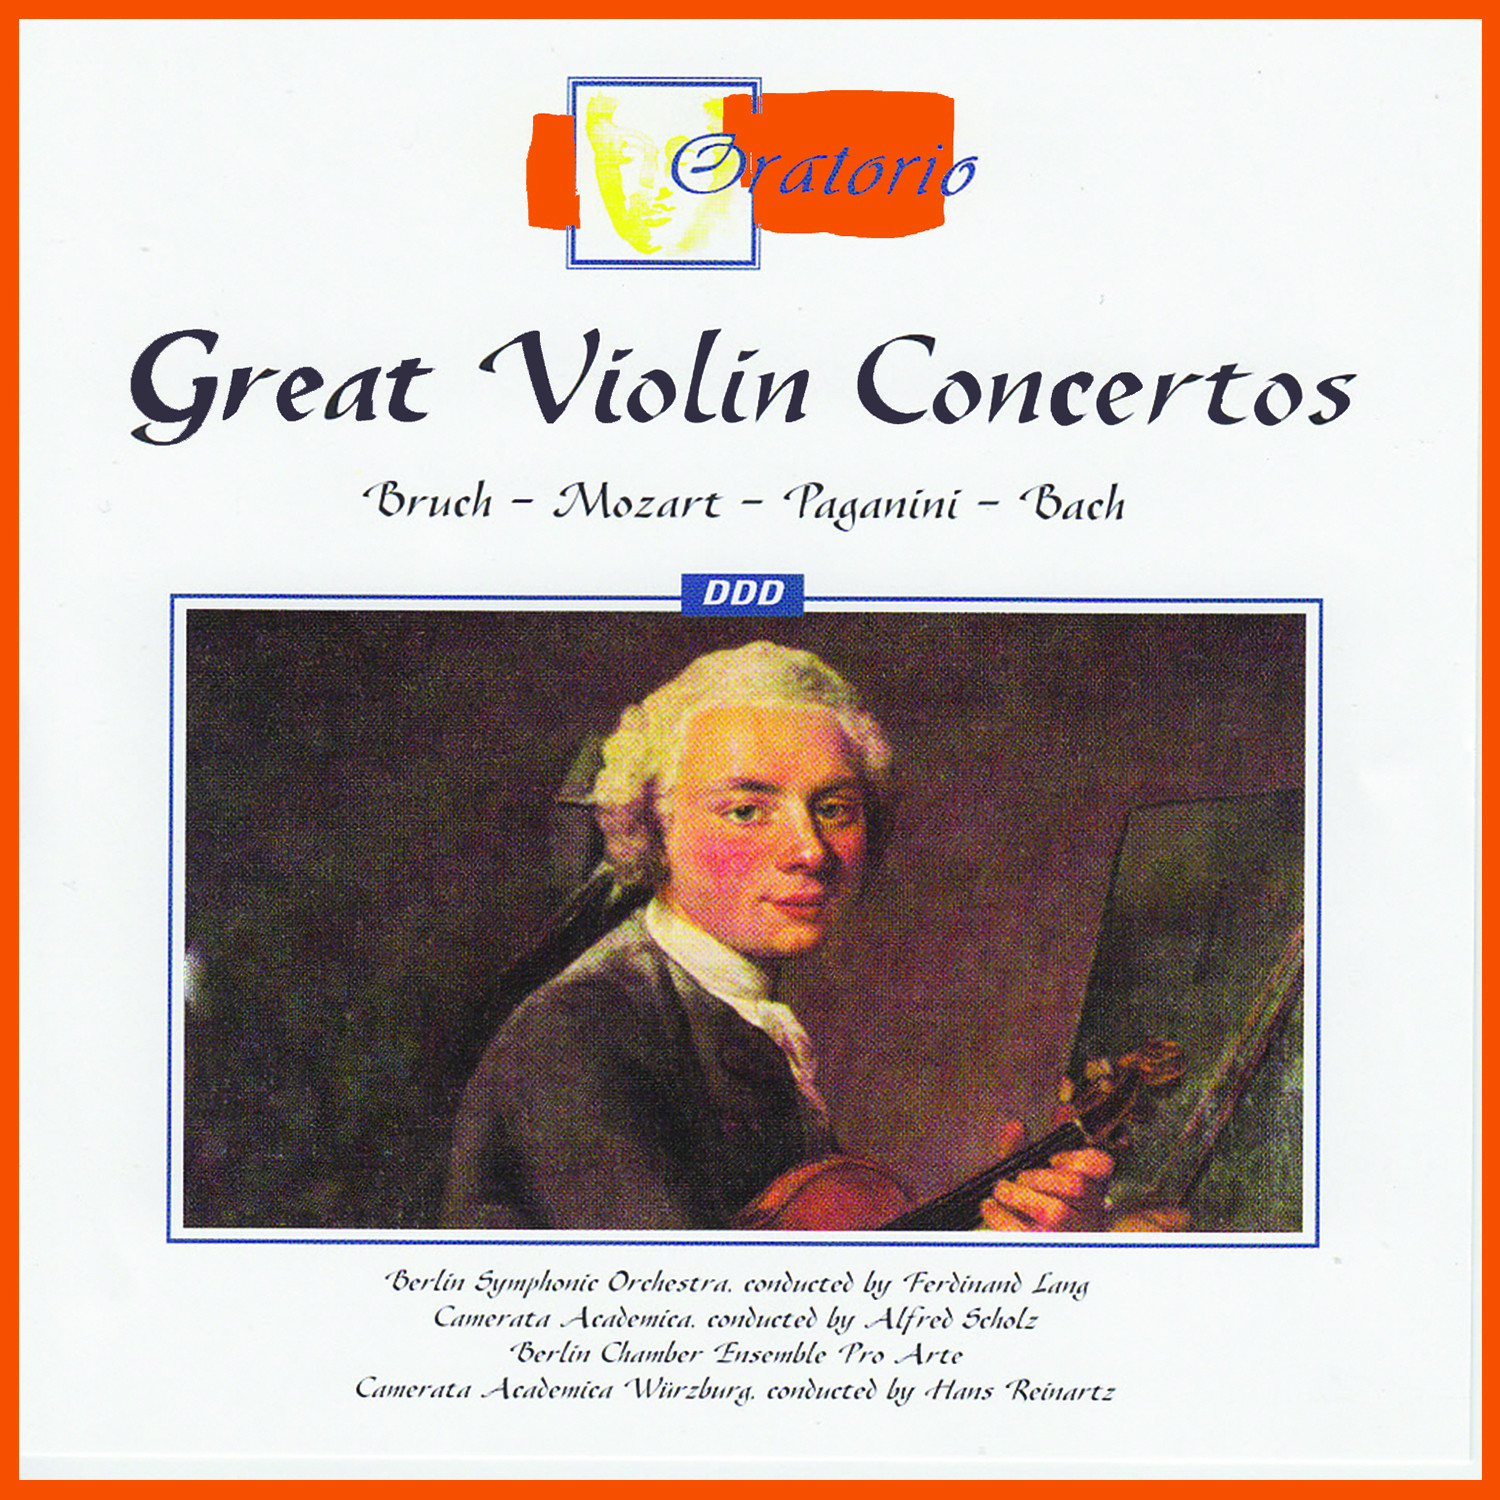 Bruch - Mozart - Paganini - Bach: Great Violin Concertos